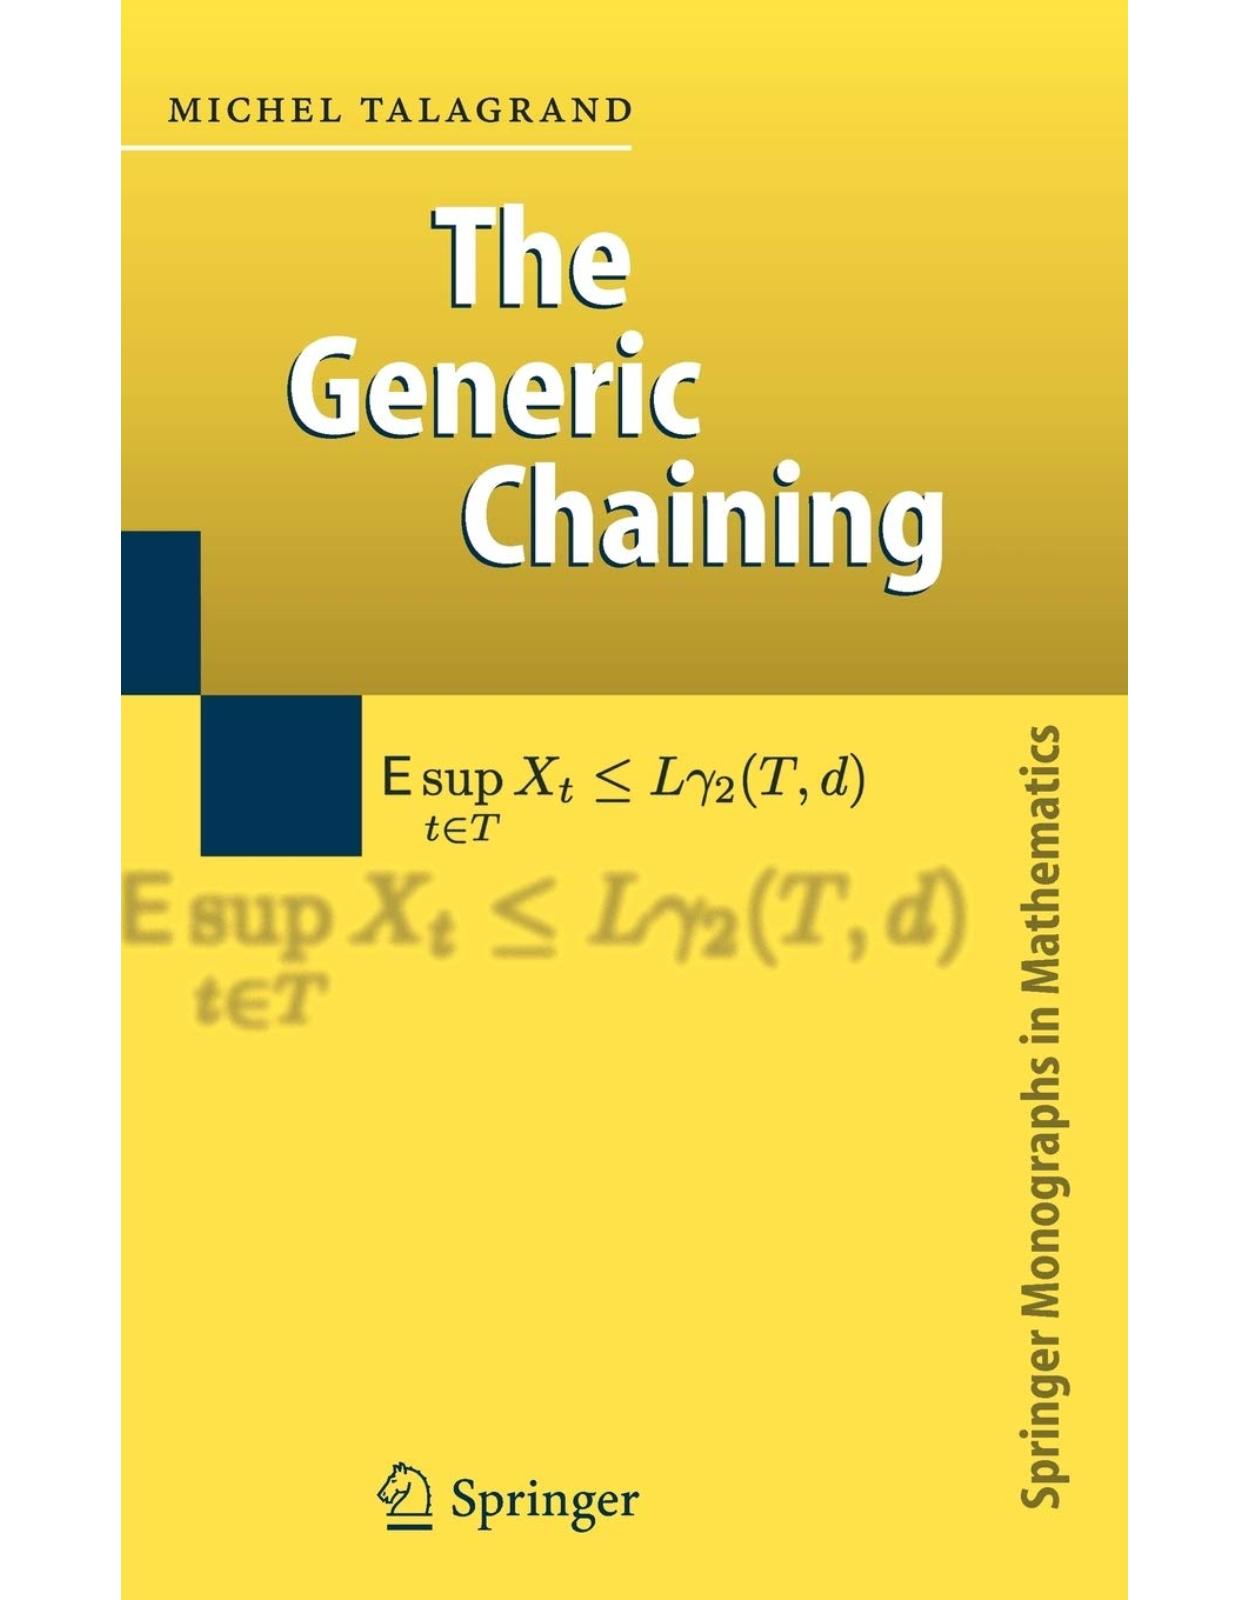 The Generic Chaining